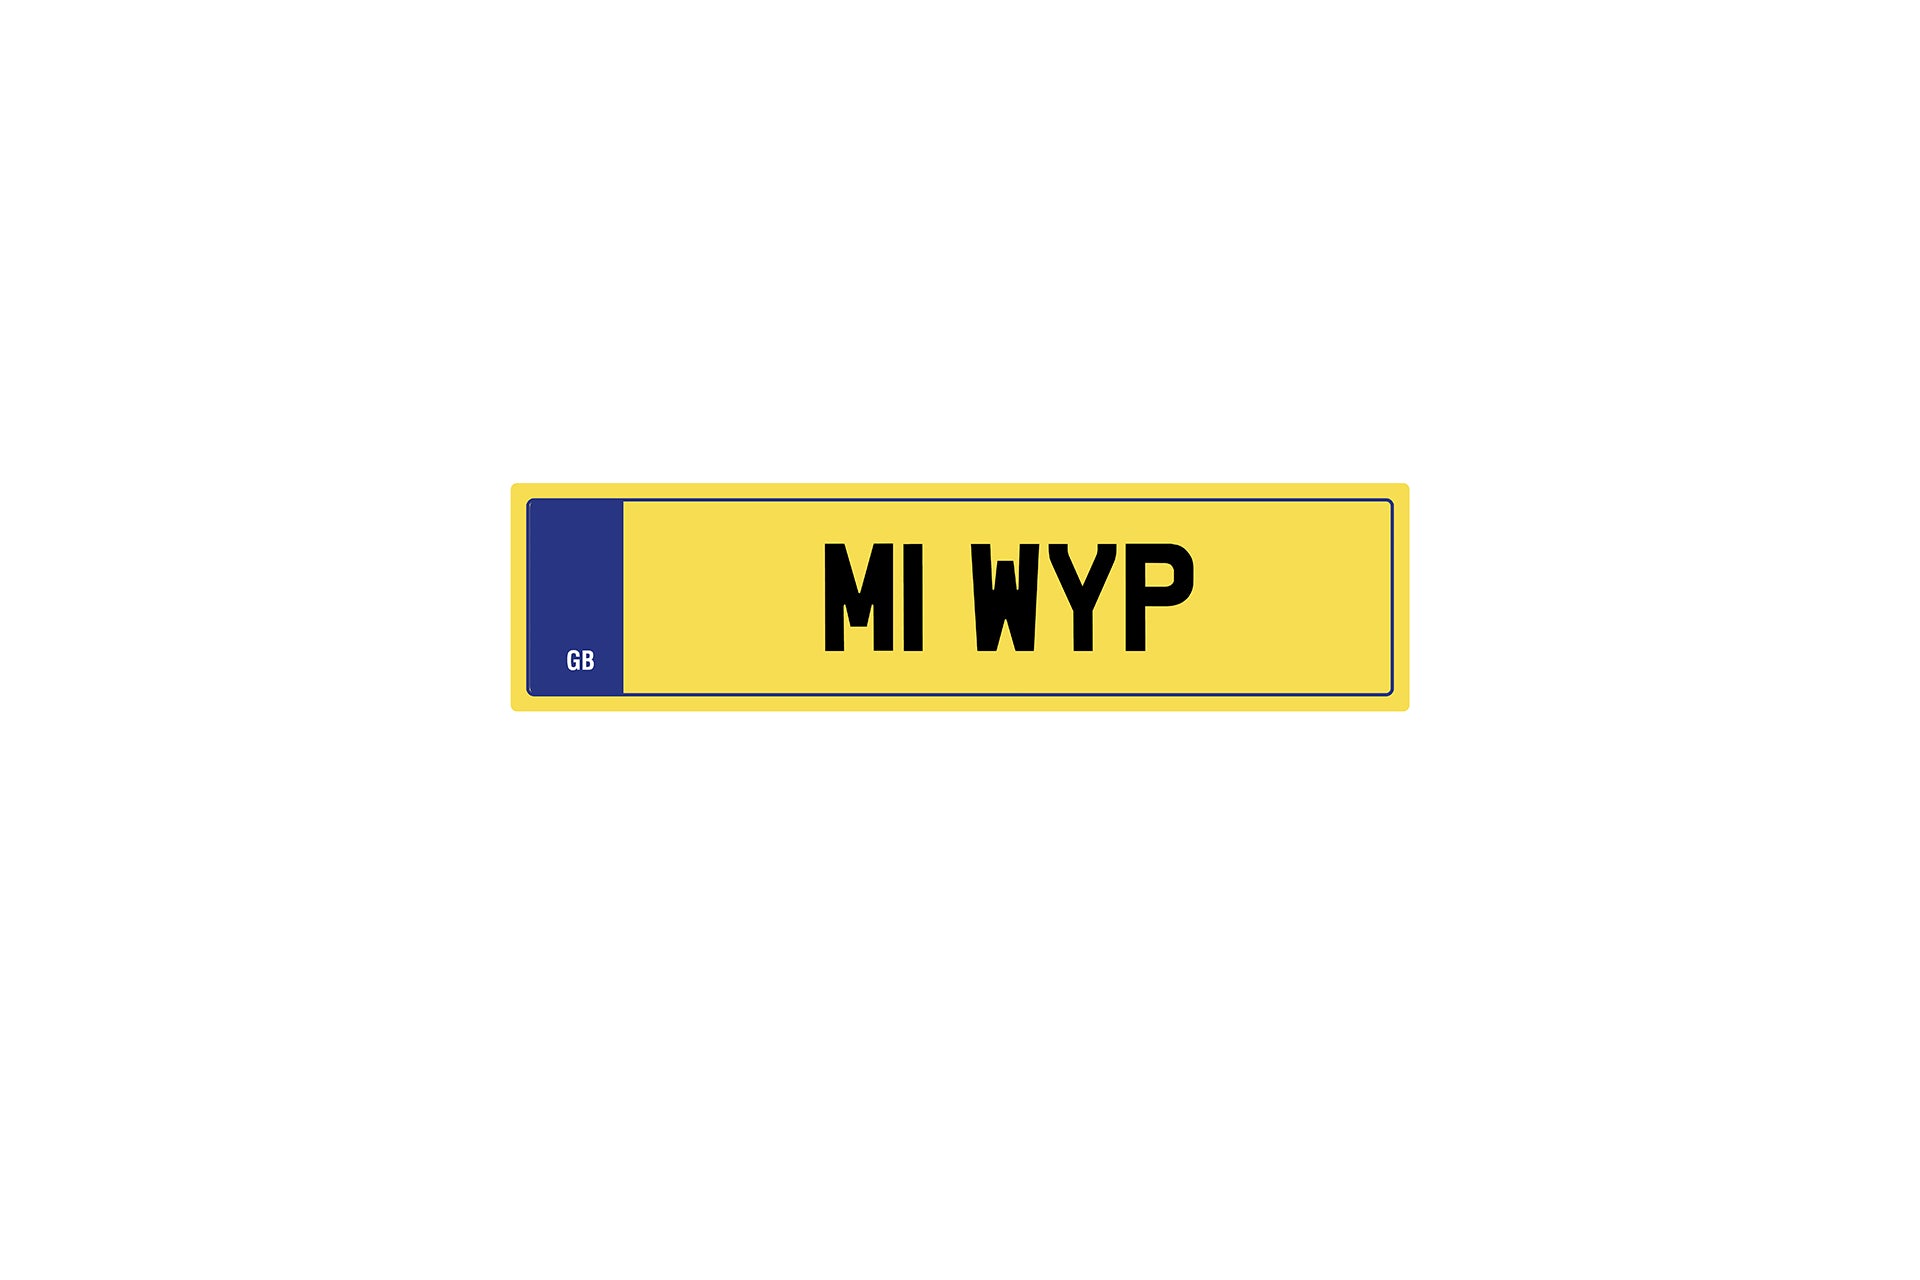 Private Plate M1 WYP